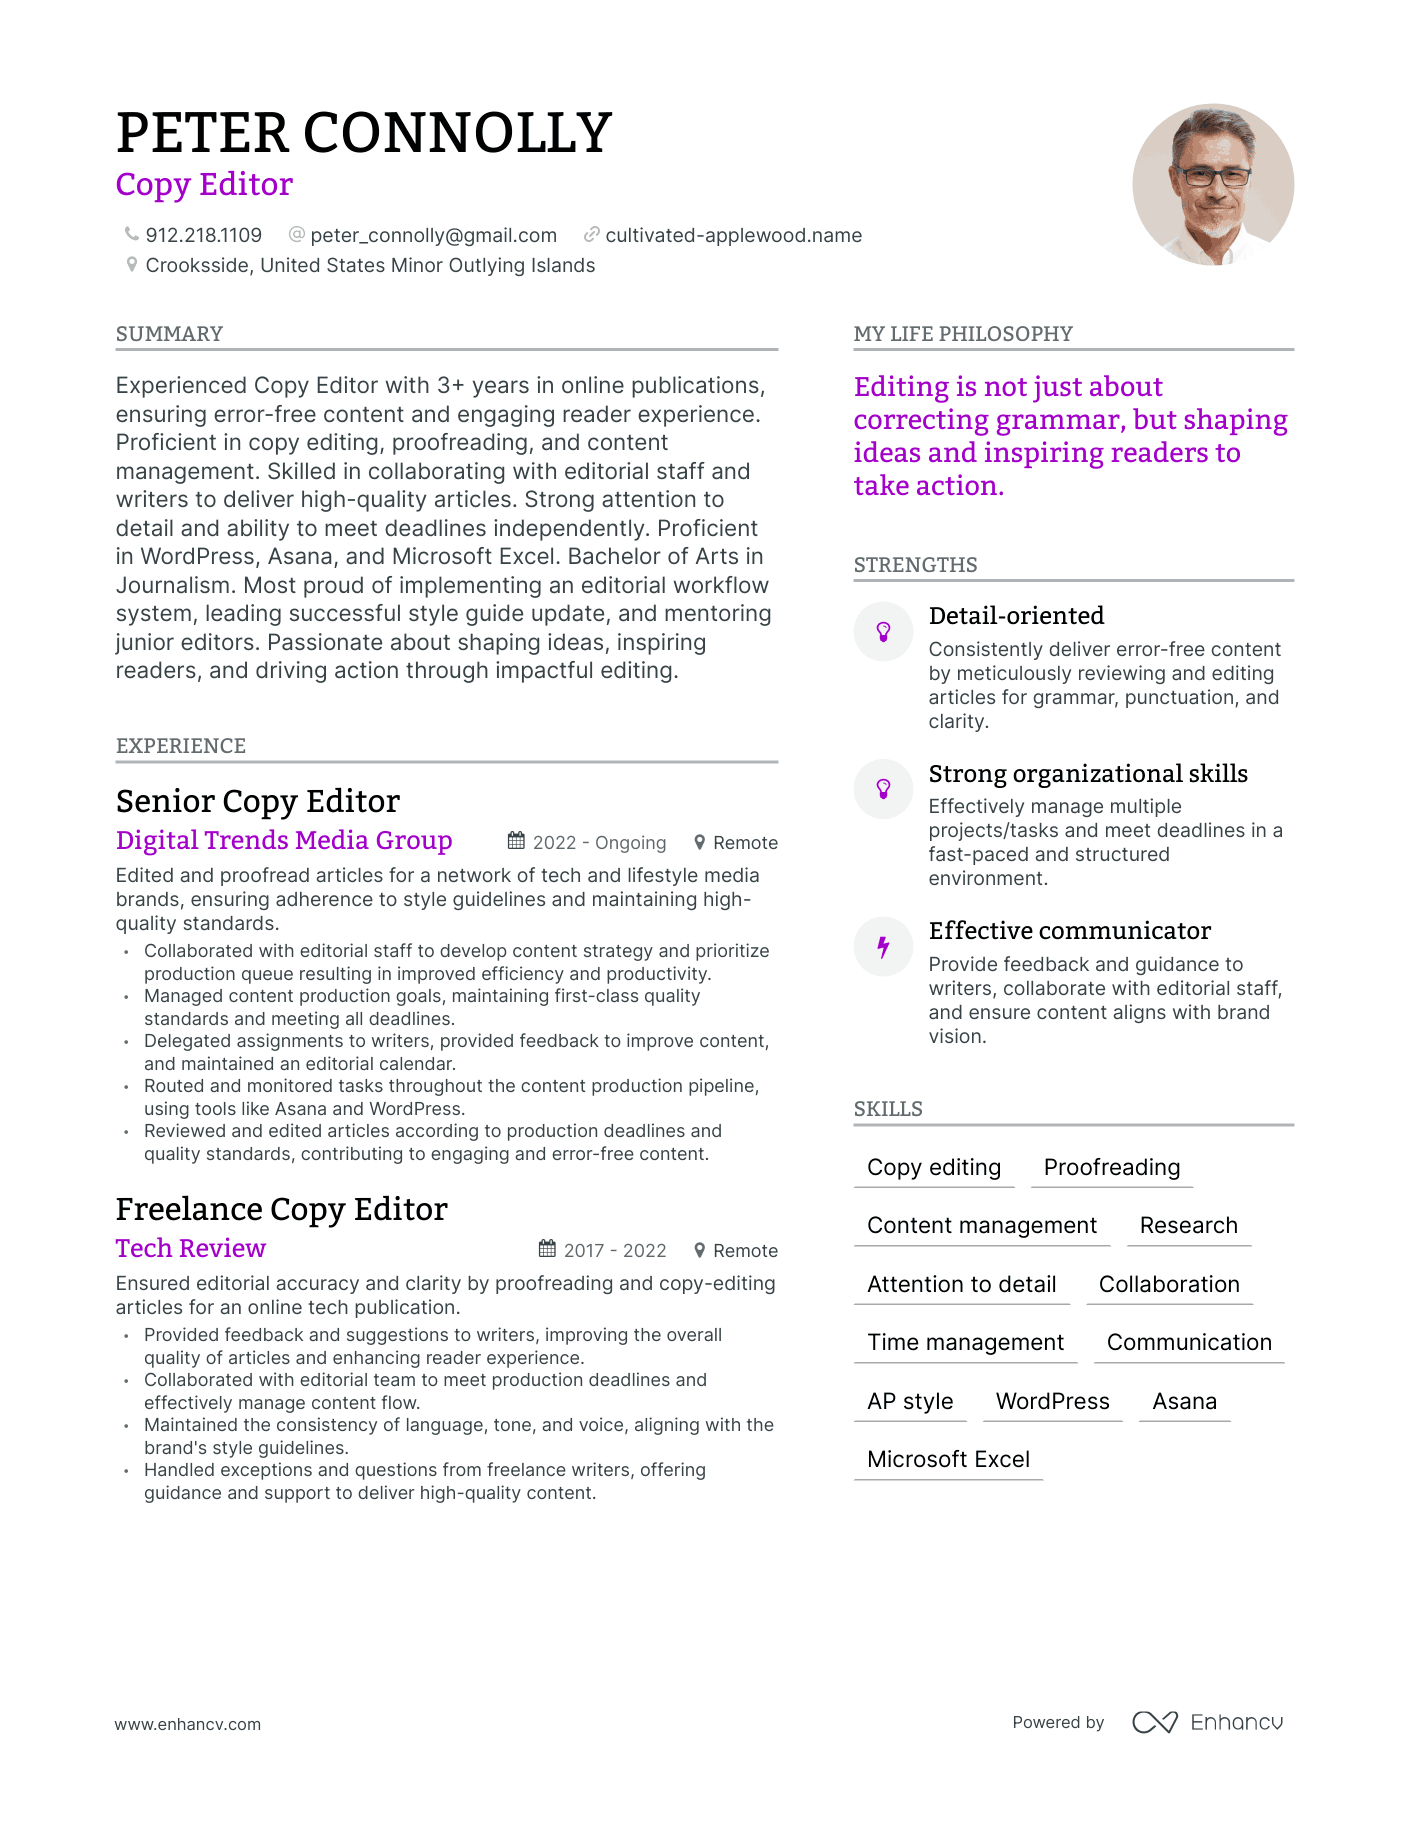 Copy Editor resume example